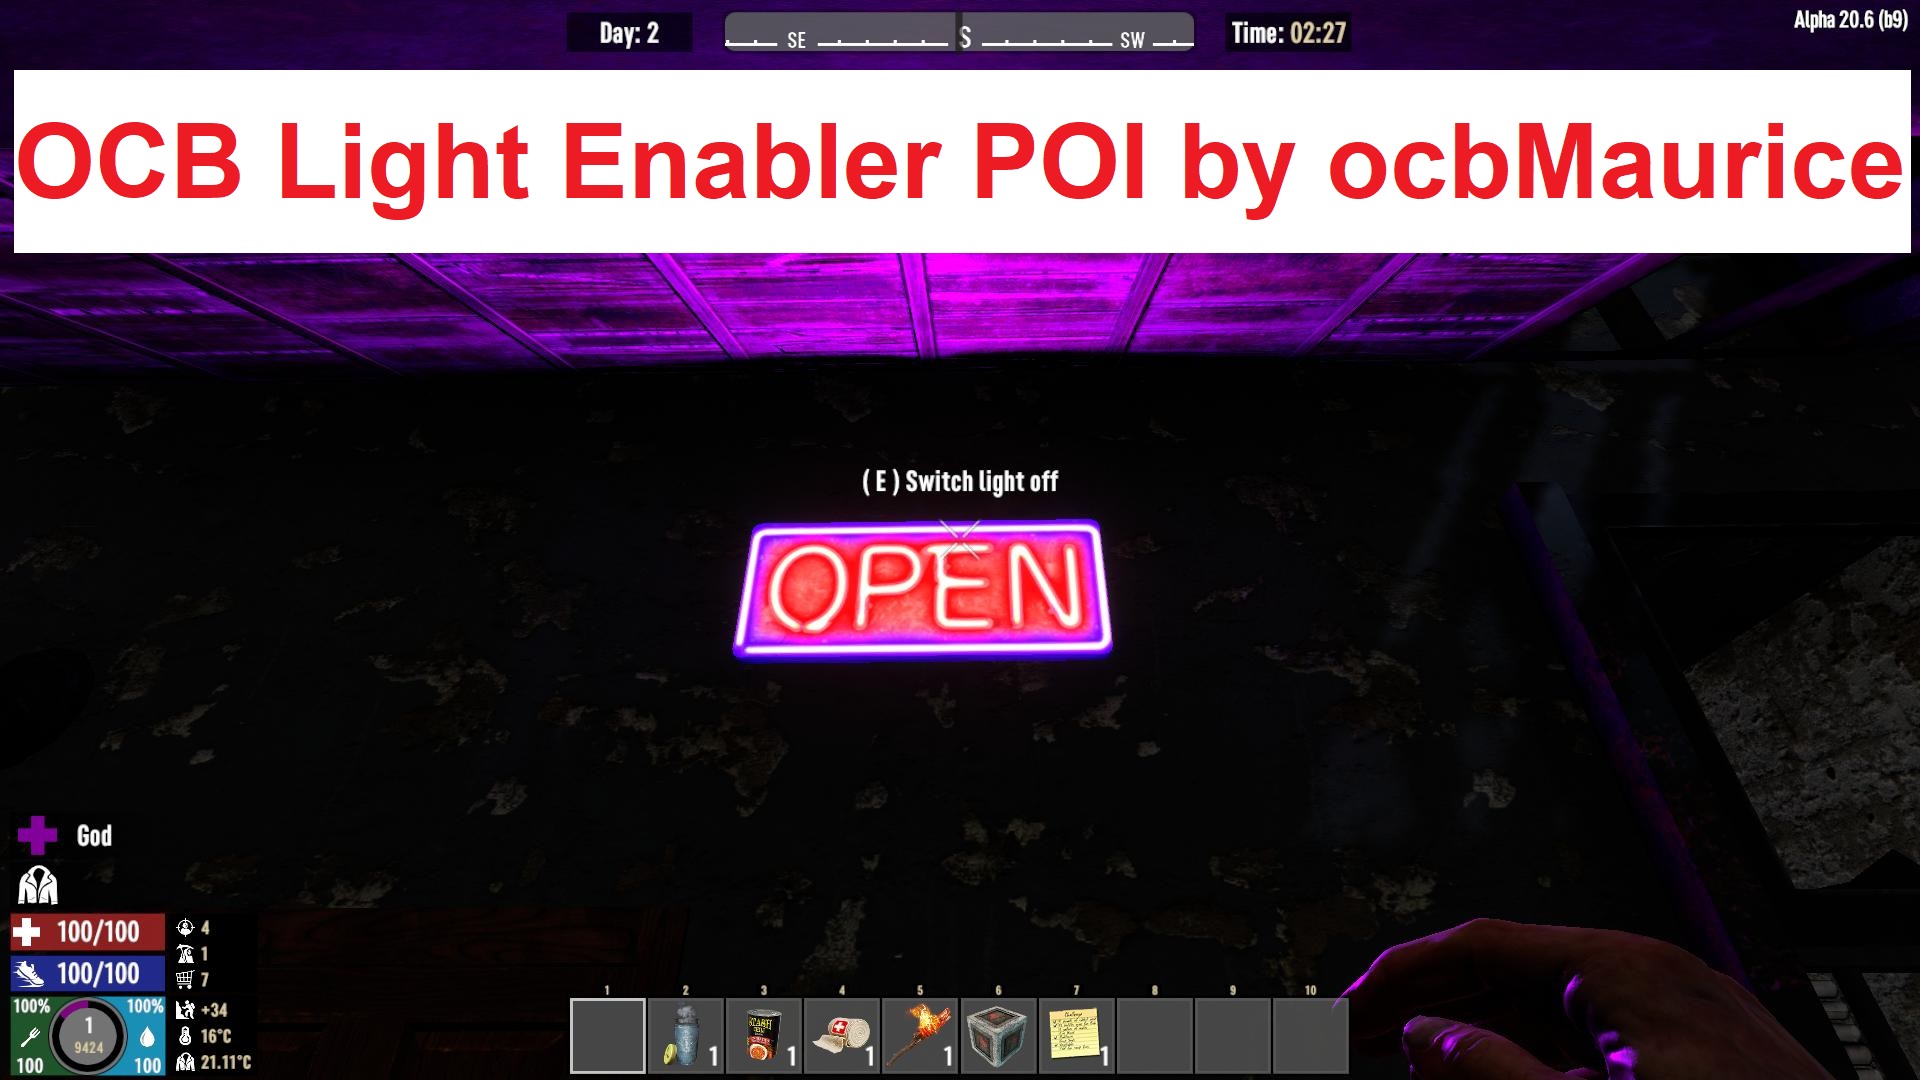 OCB Light Enabler POI by ocbMaurice